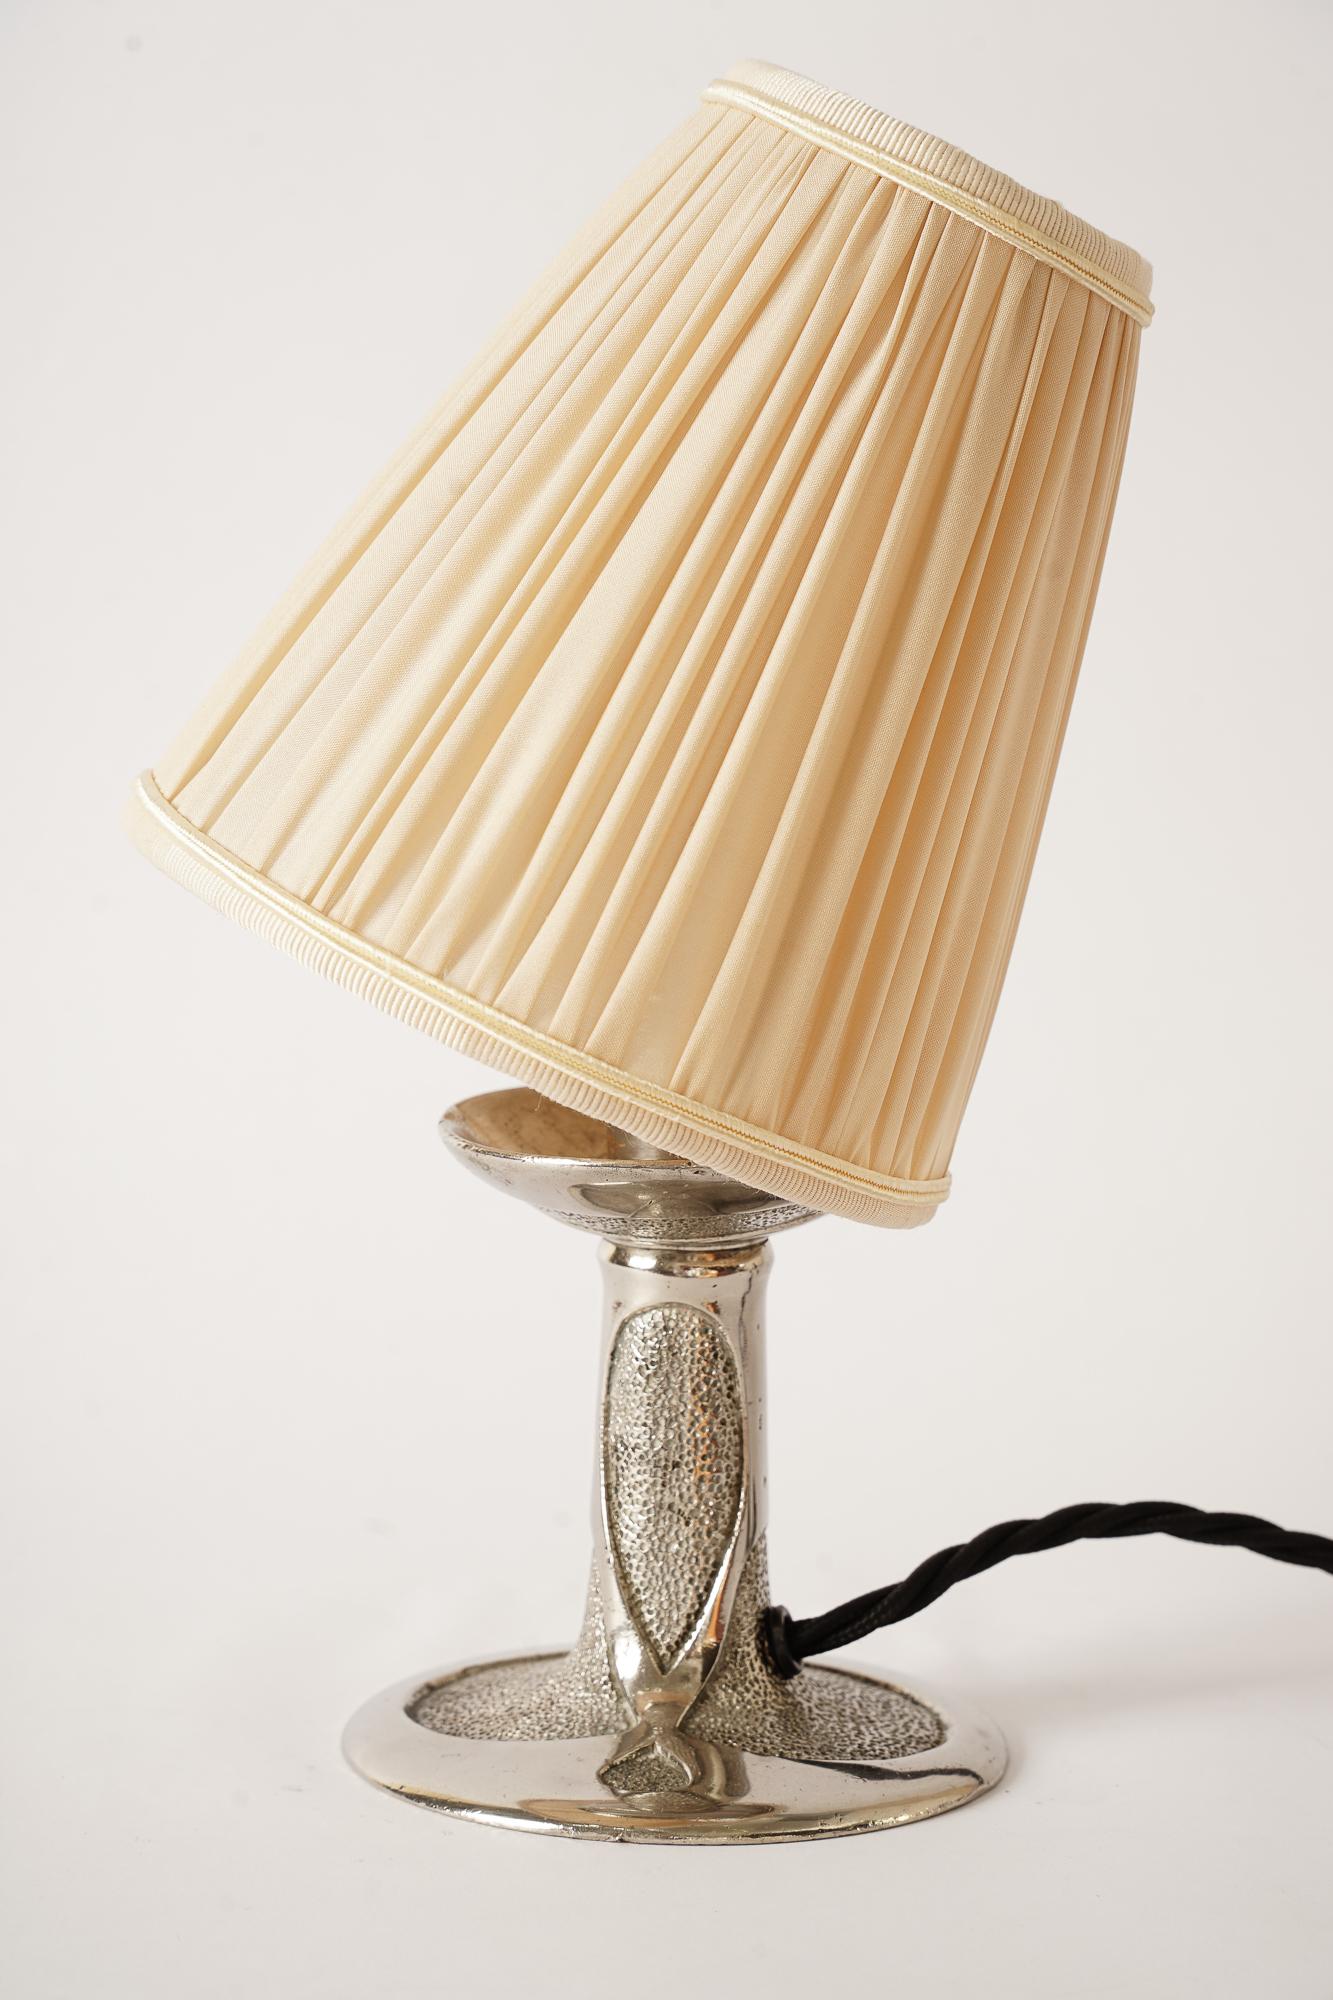 Plated Massive Nickel Art Deco Table Lamp Vienna Around 1920 with Fabric Shade